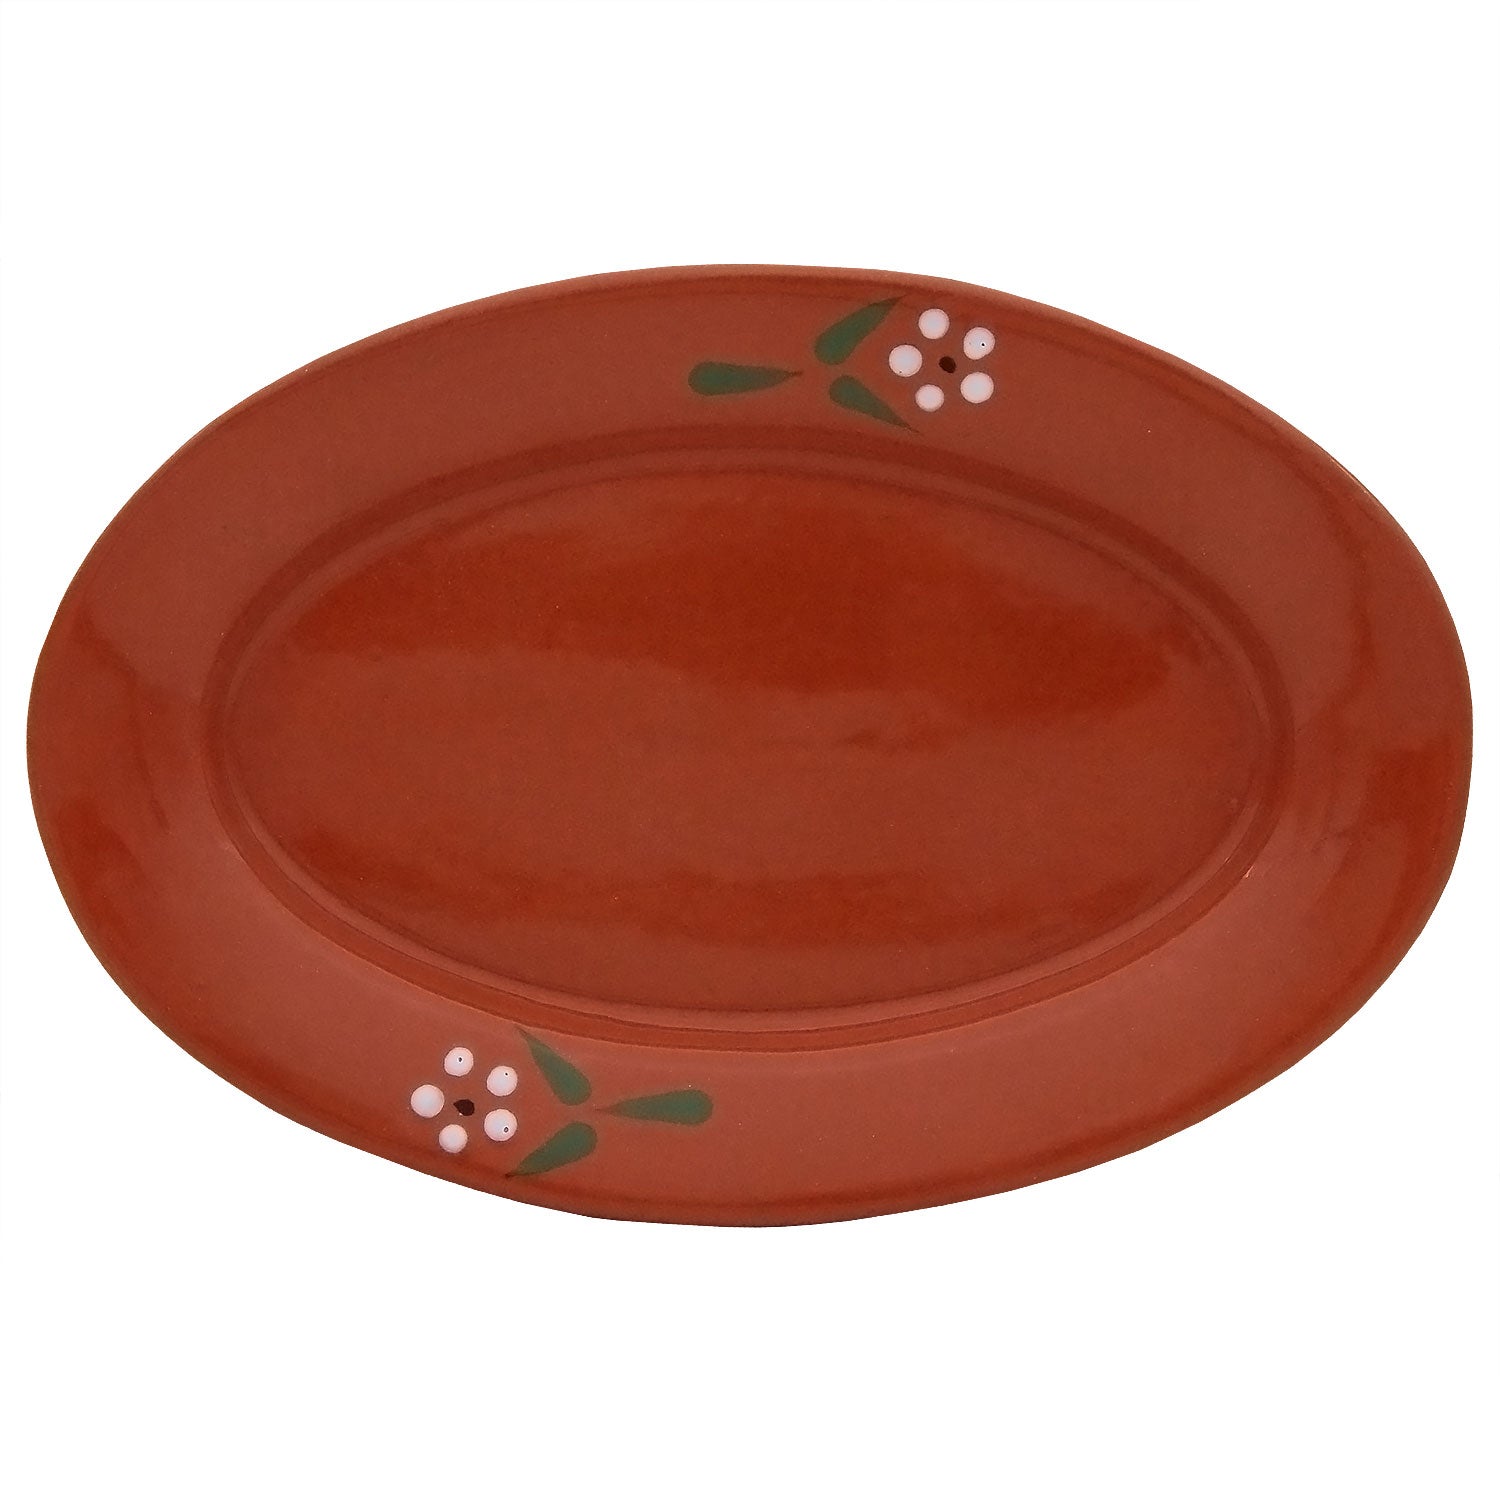 Portuguese Pottery Terracotta Glazed Clay Oval Serving Platter